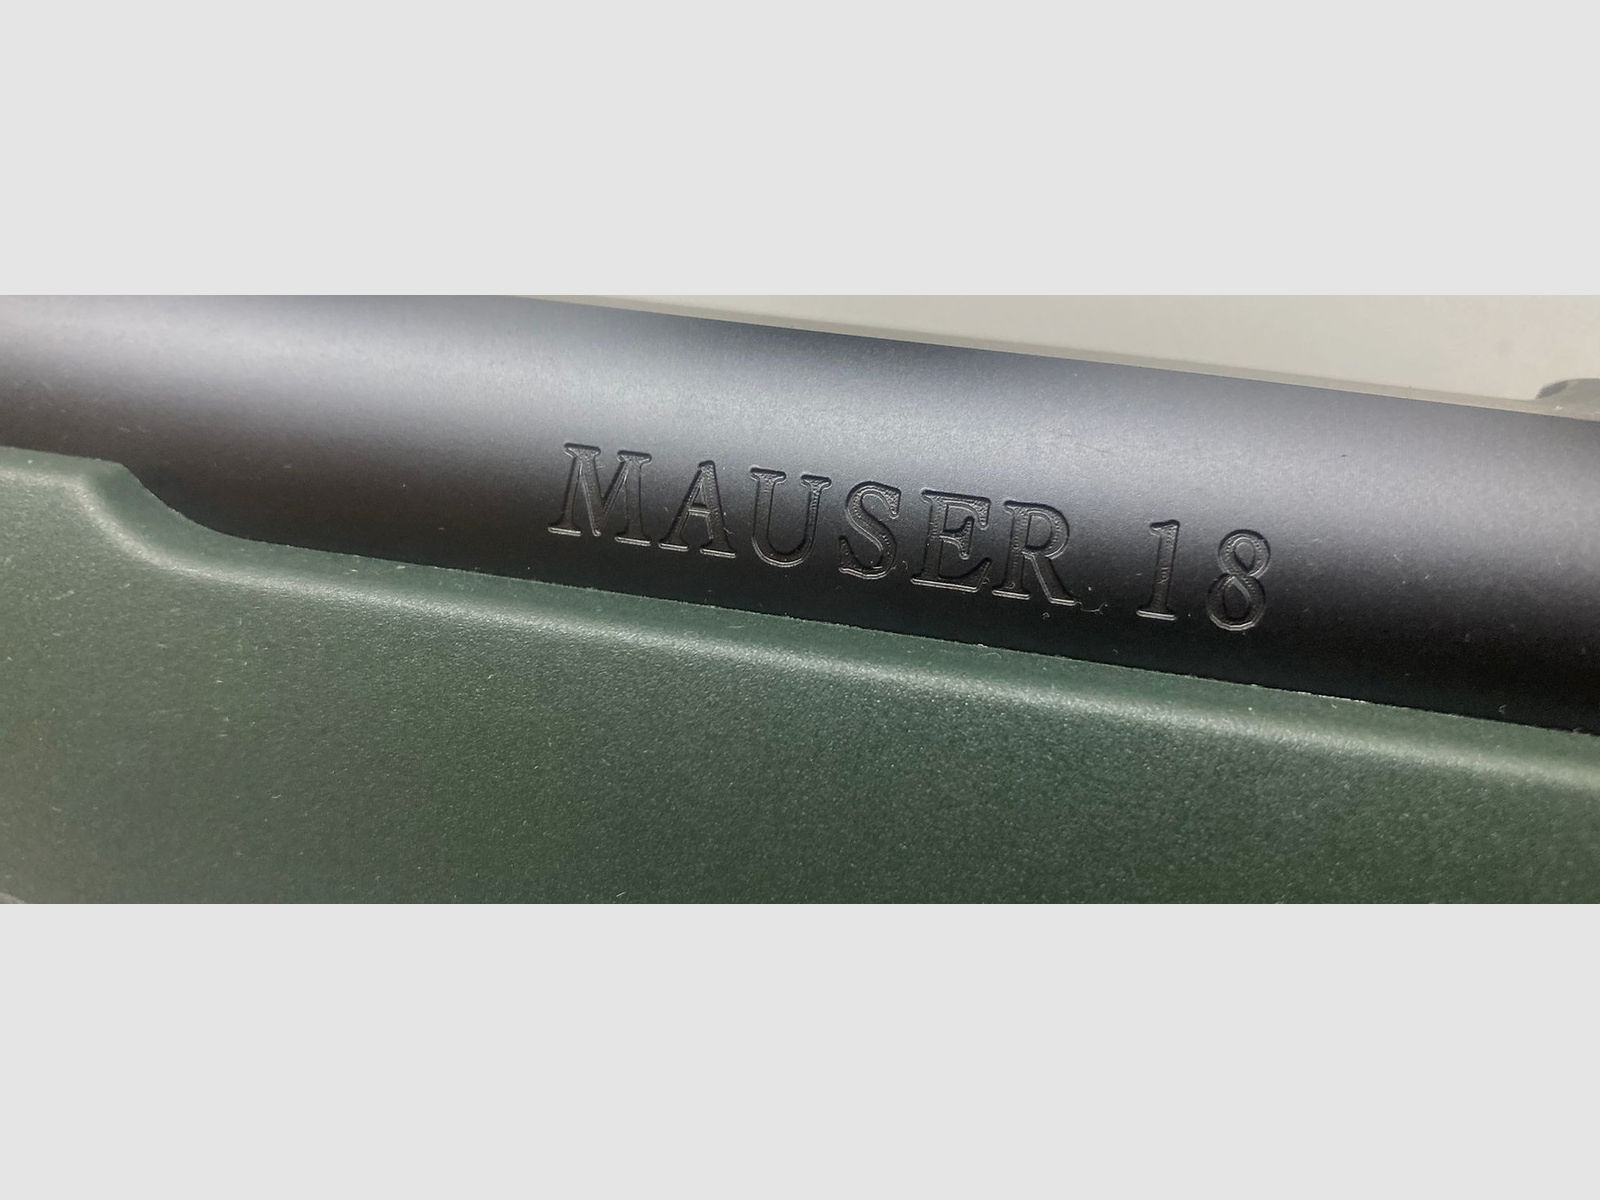 MAUSER M18 Waldjagd | Jungjäger 2024 | Profi-Starter-Paket